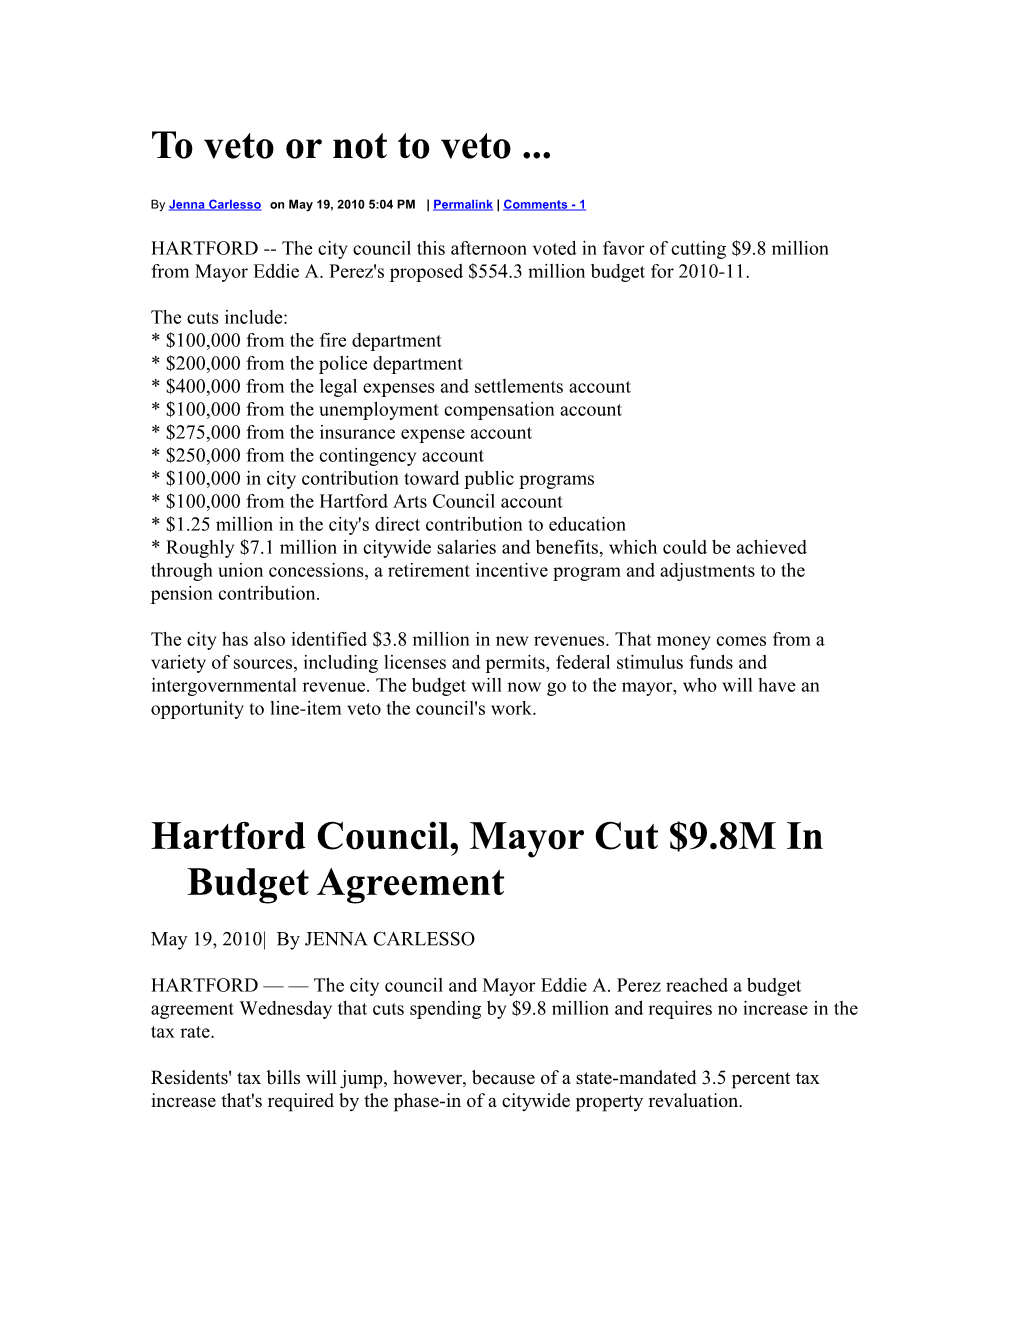 Hartford Council, Mayor Cut $9